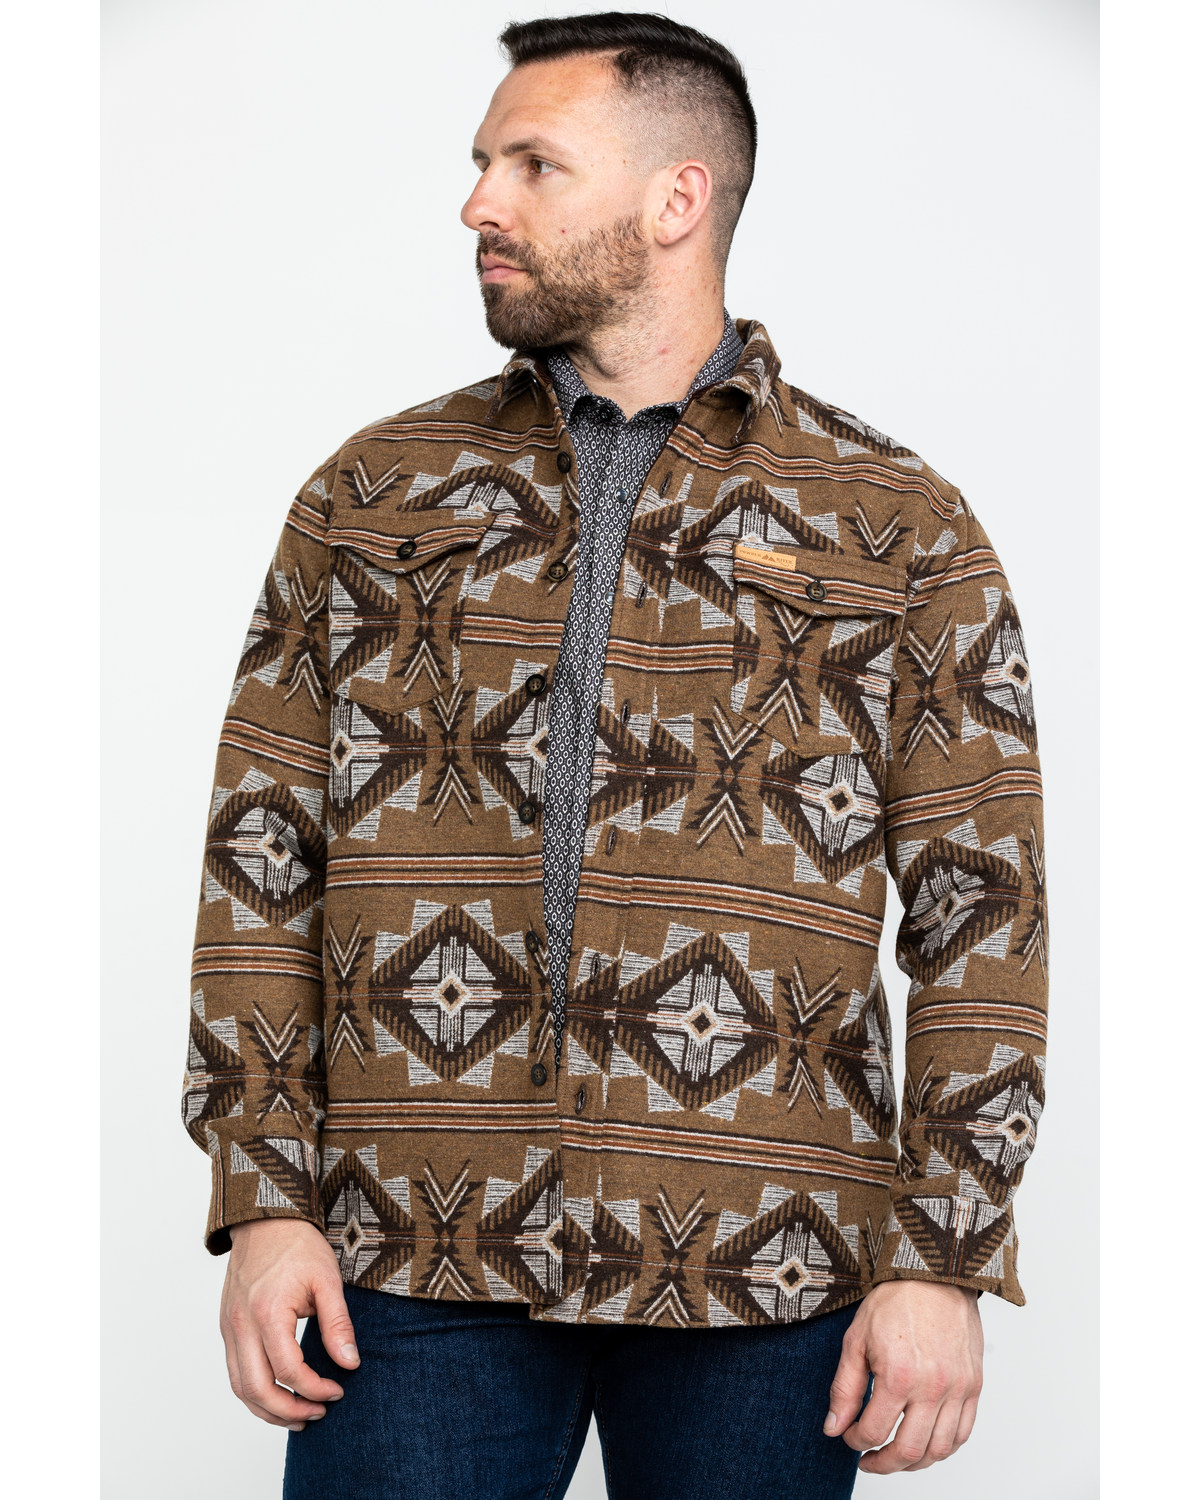 Powder River Outfitters Men's Southwestern Jacquard Shirt Jacket